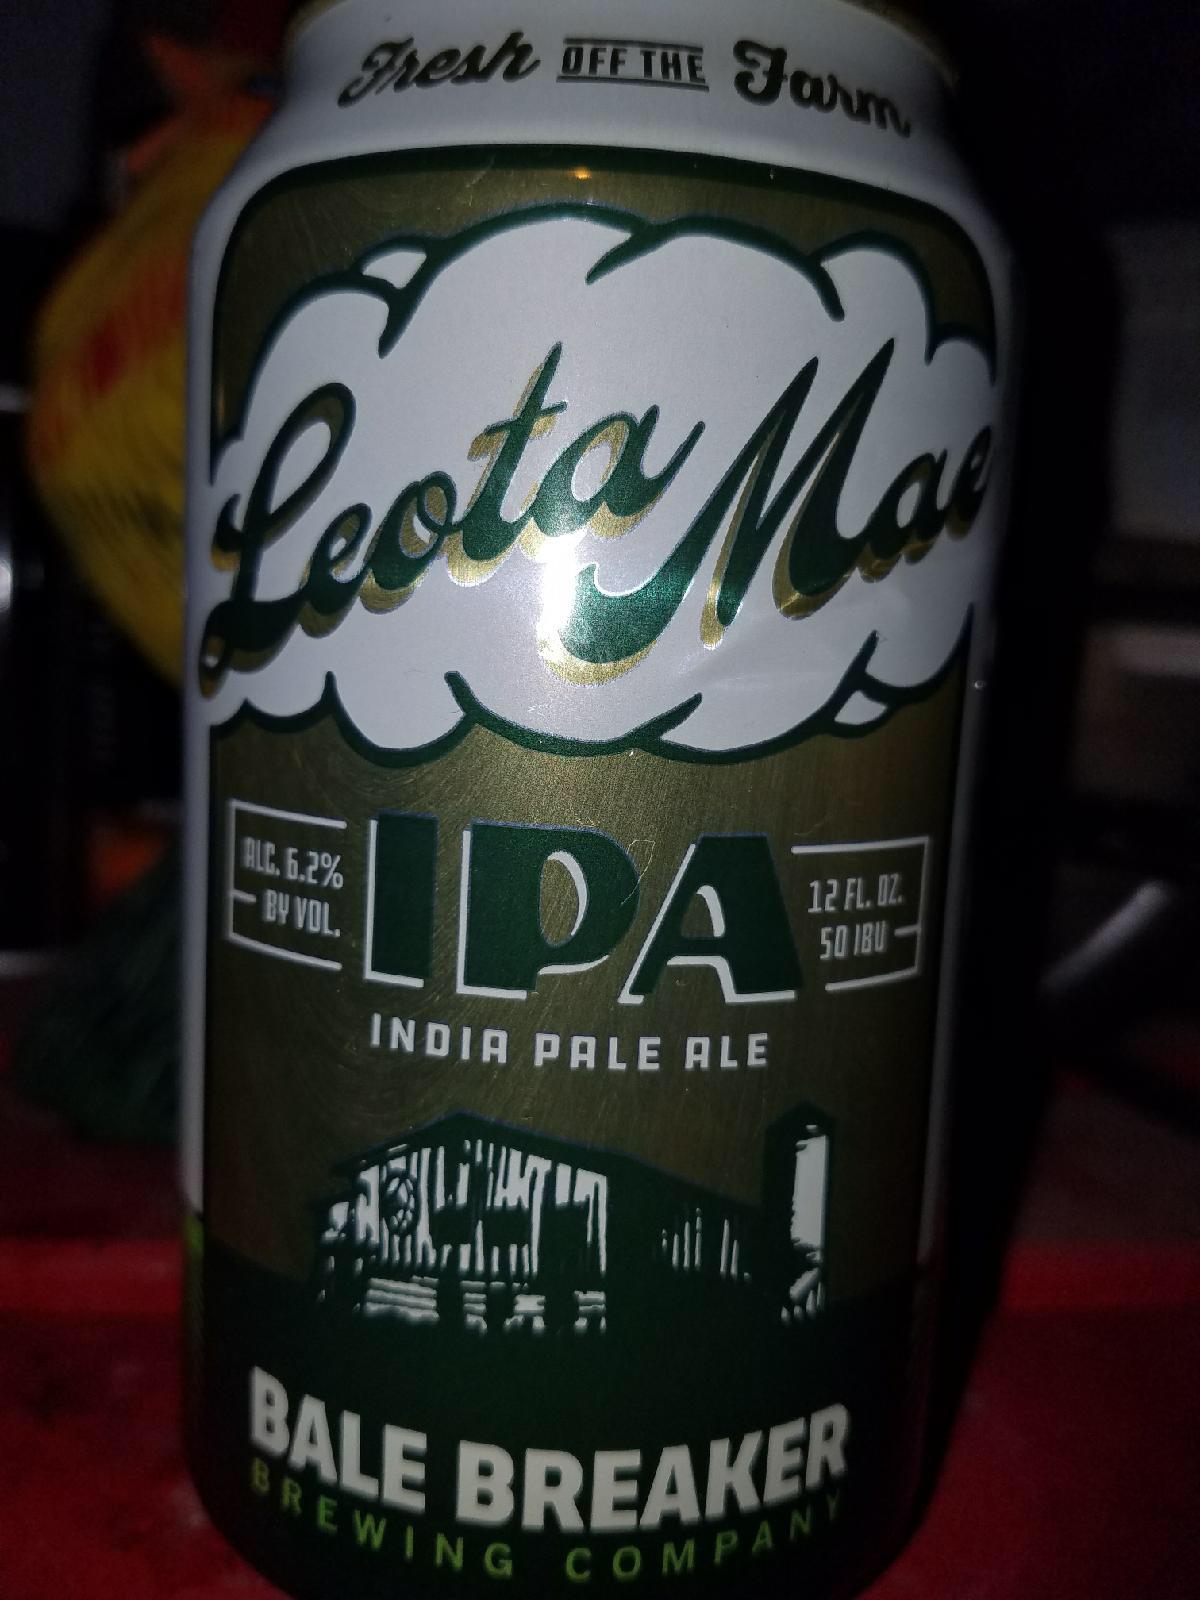 Leota Mae IPA